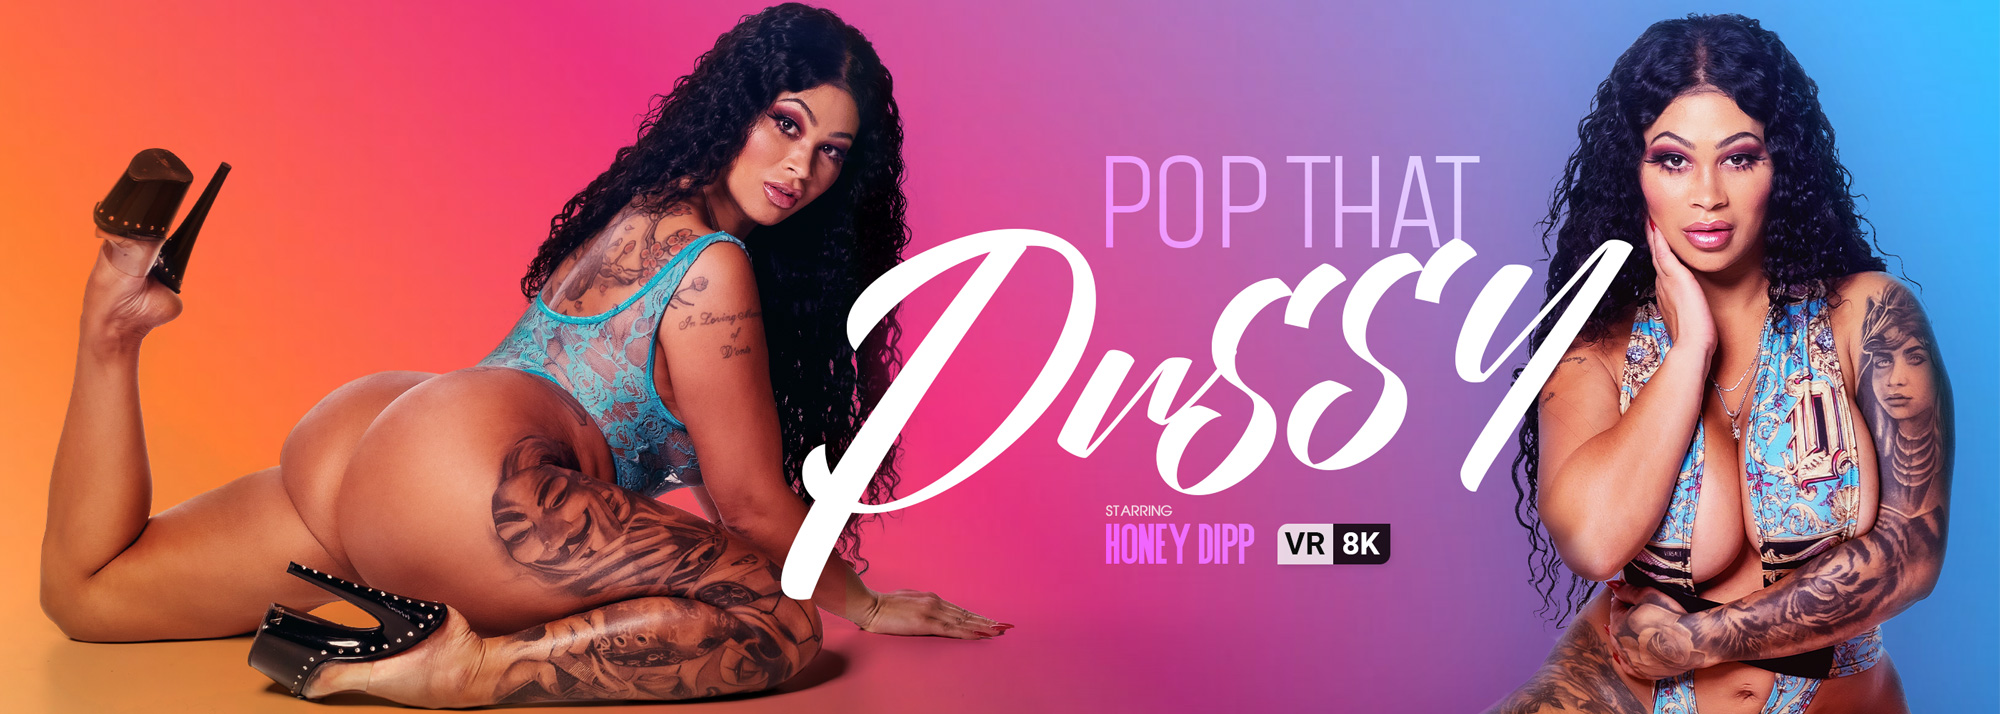 Pop That Pussy - VR Porn Video, Starring: Honey Dipp